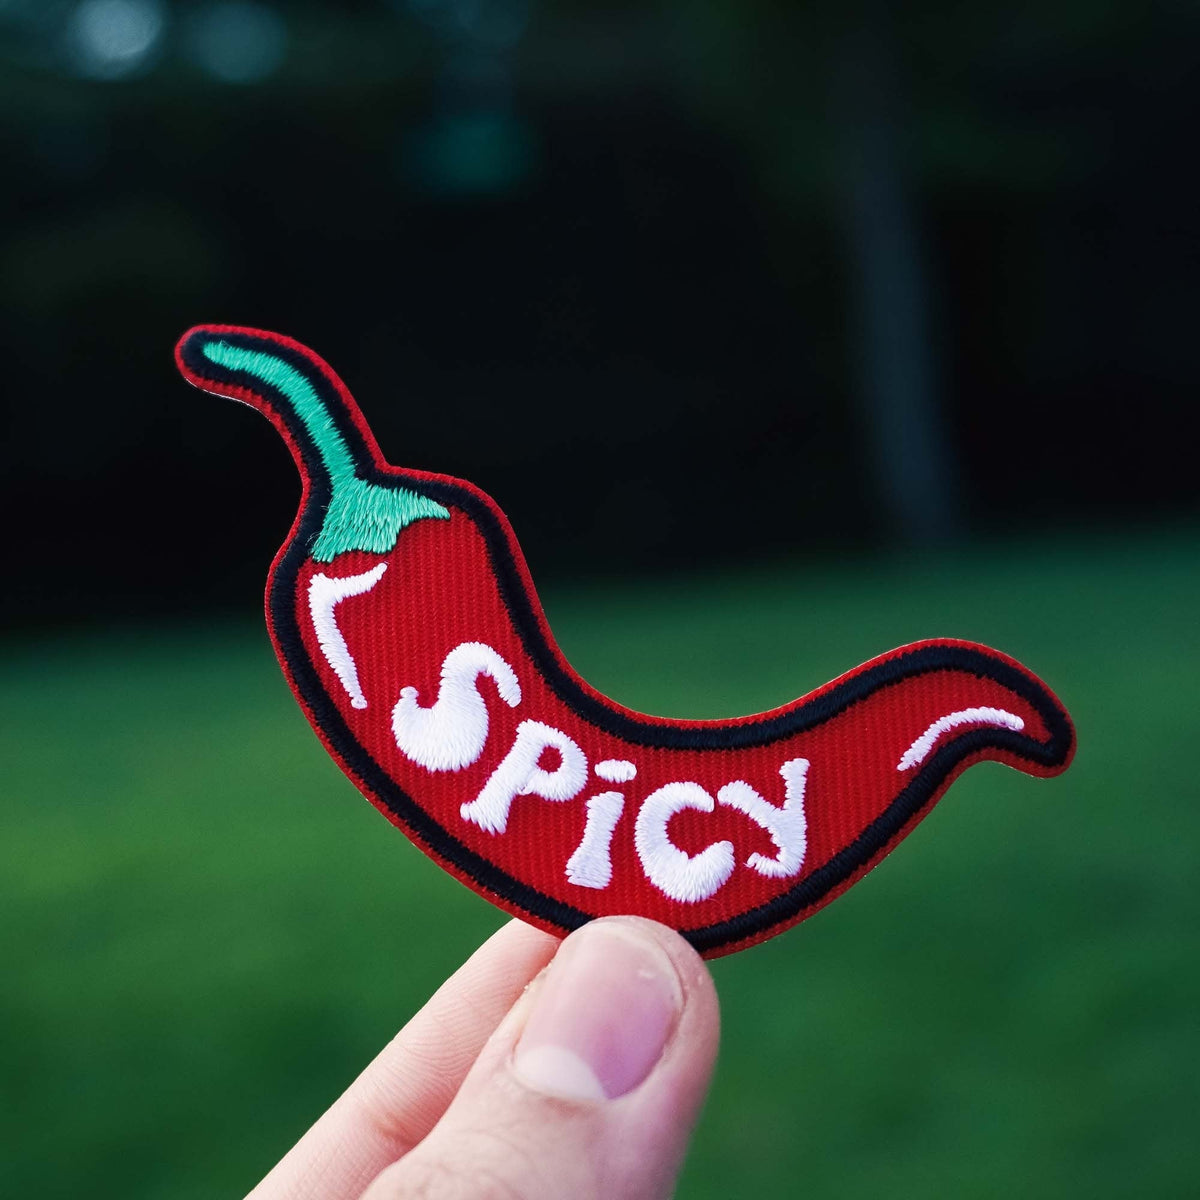 Spicy Pepper Patch - KosmicSoul